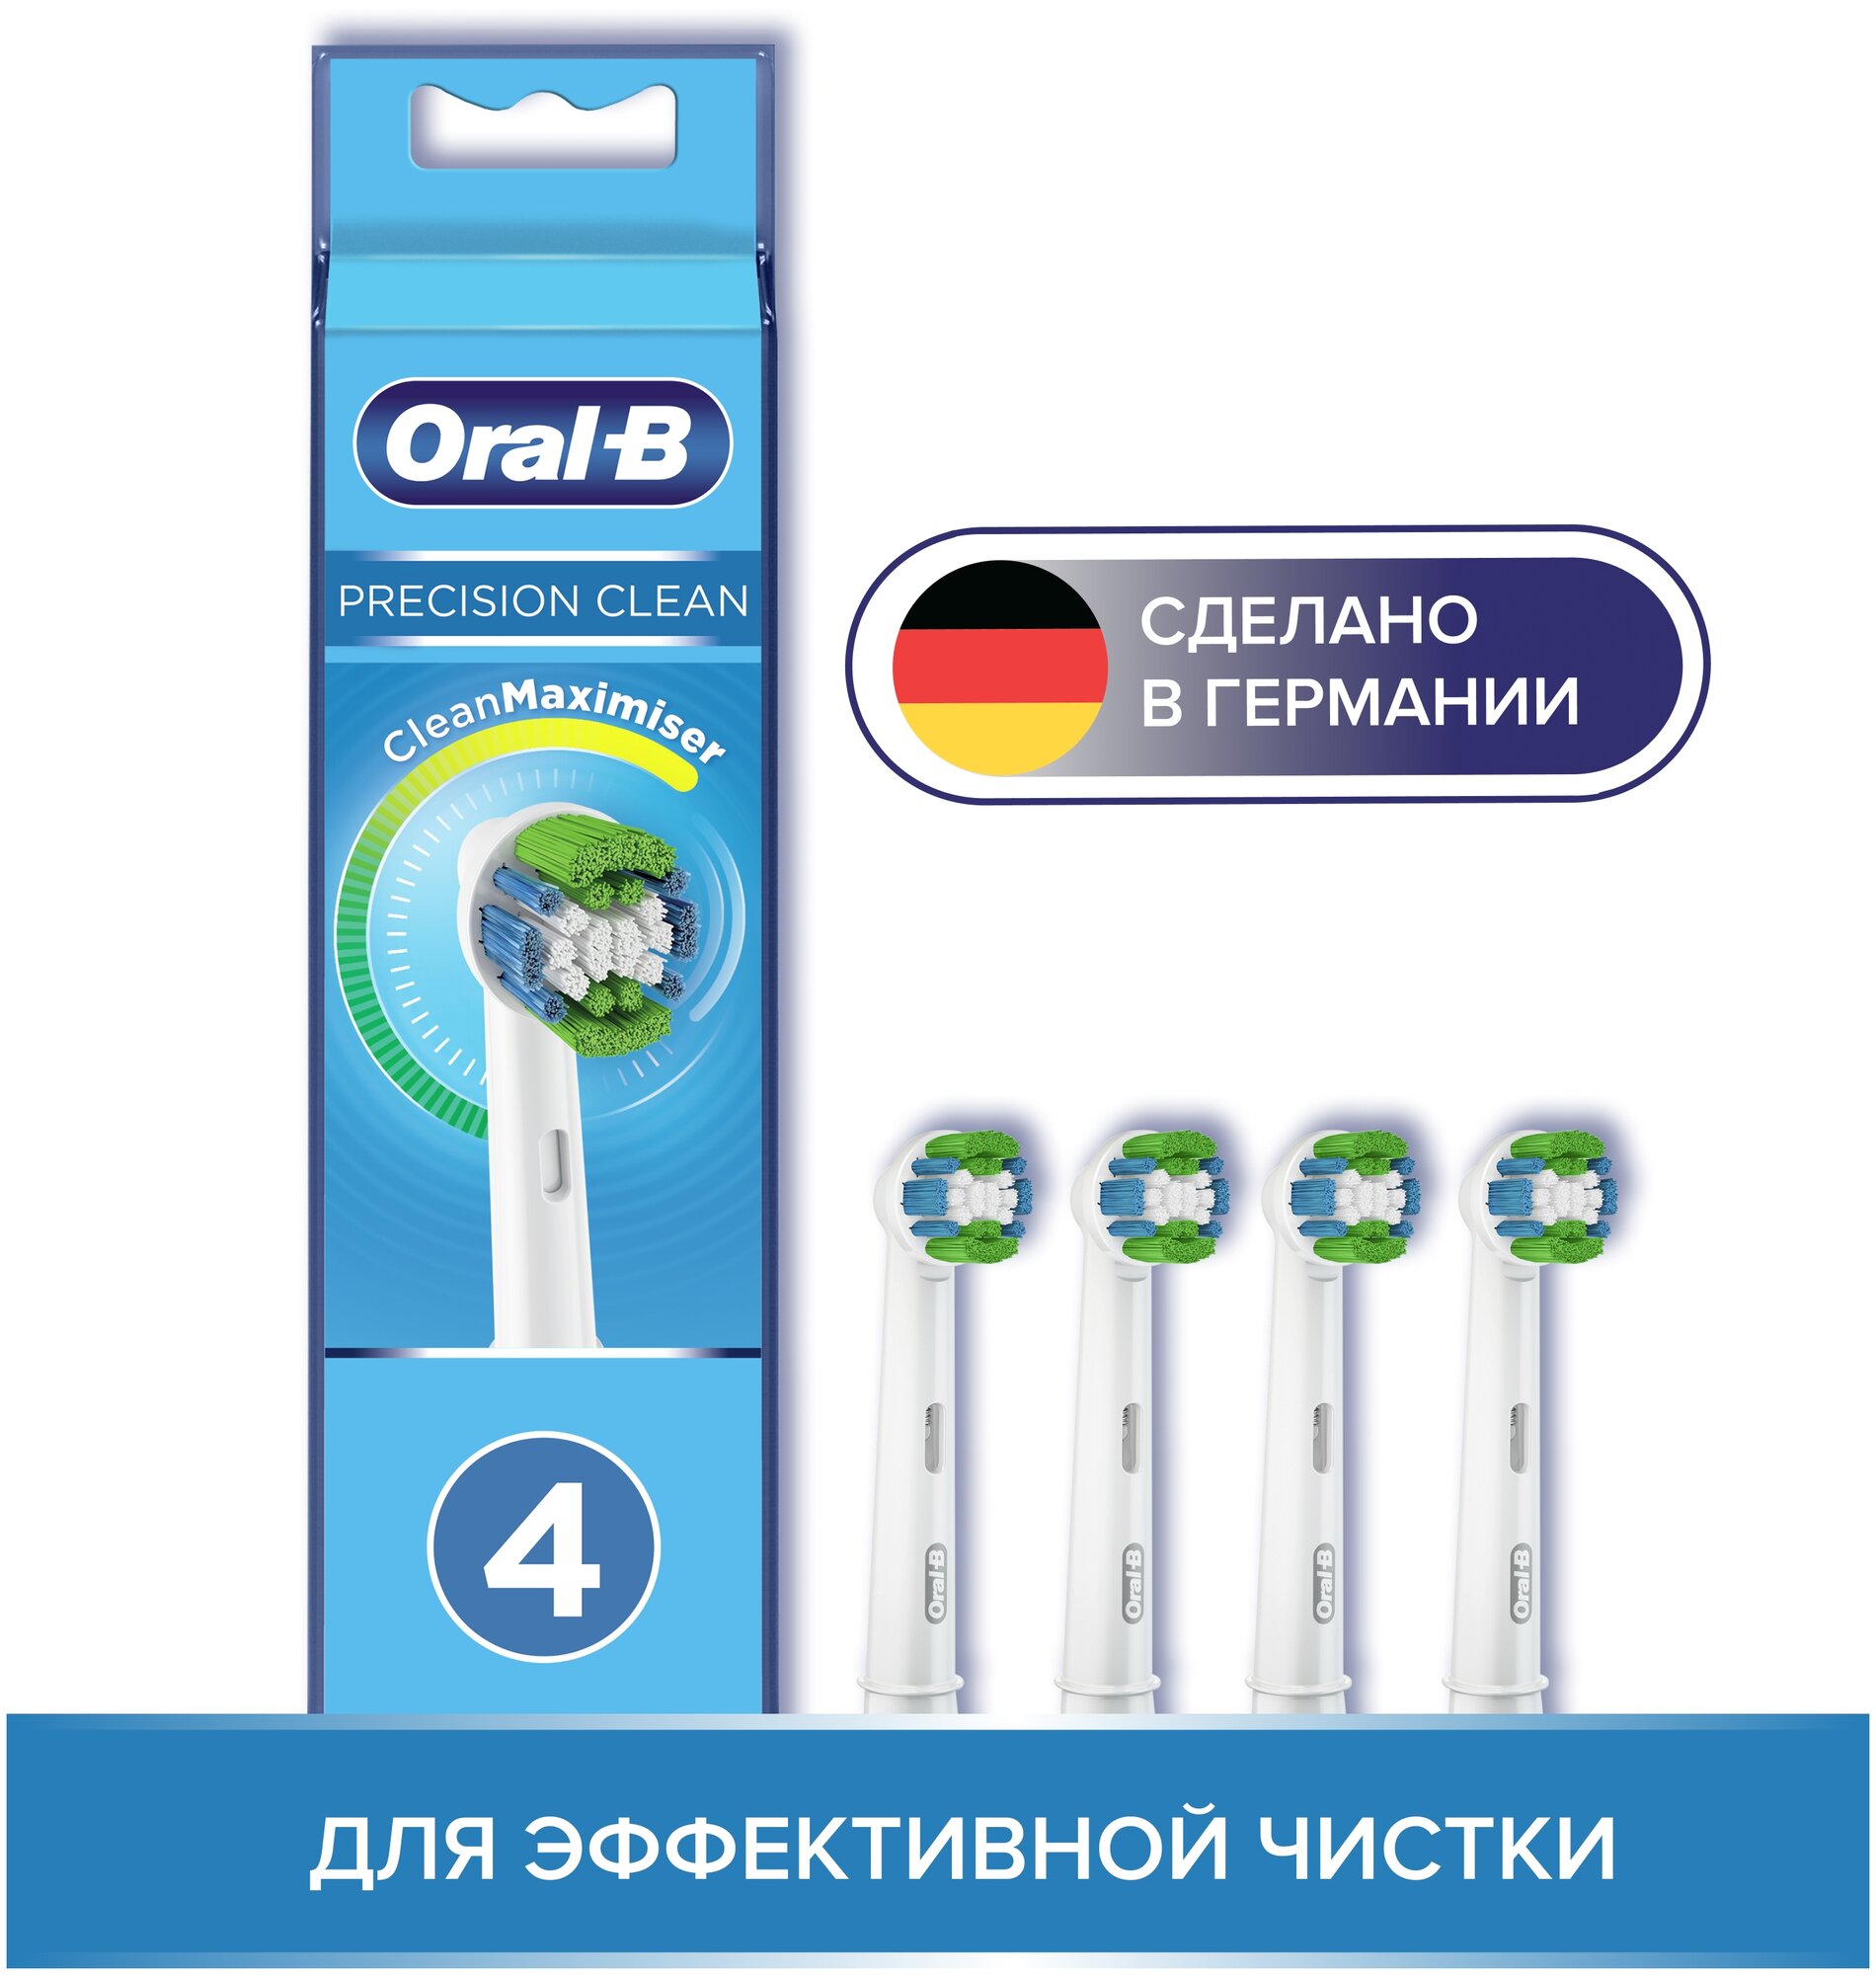 Насадка Oral-B Precision Clean CleanMaximiser для ирригатора и электрической щетки